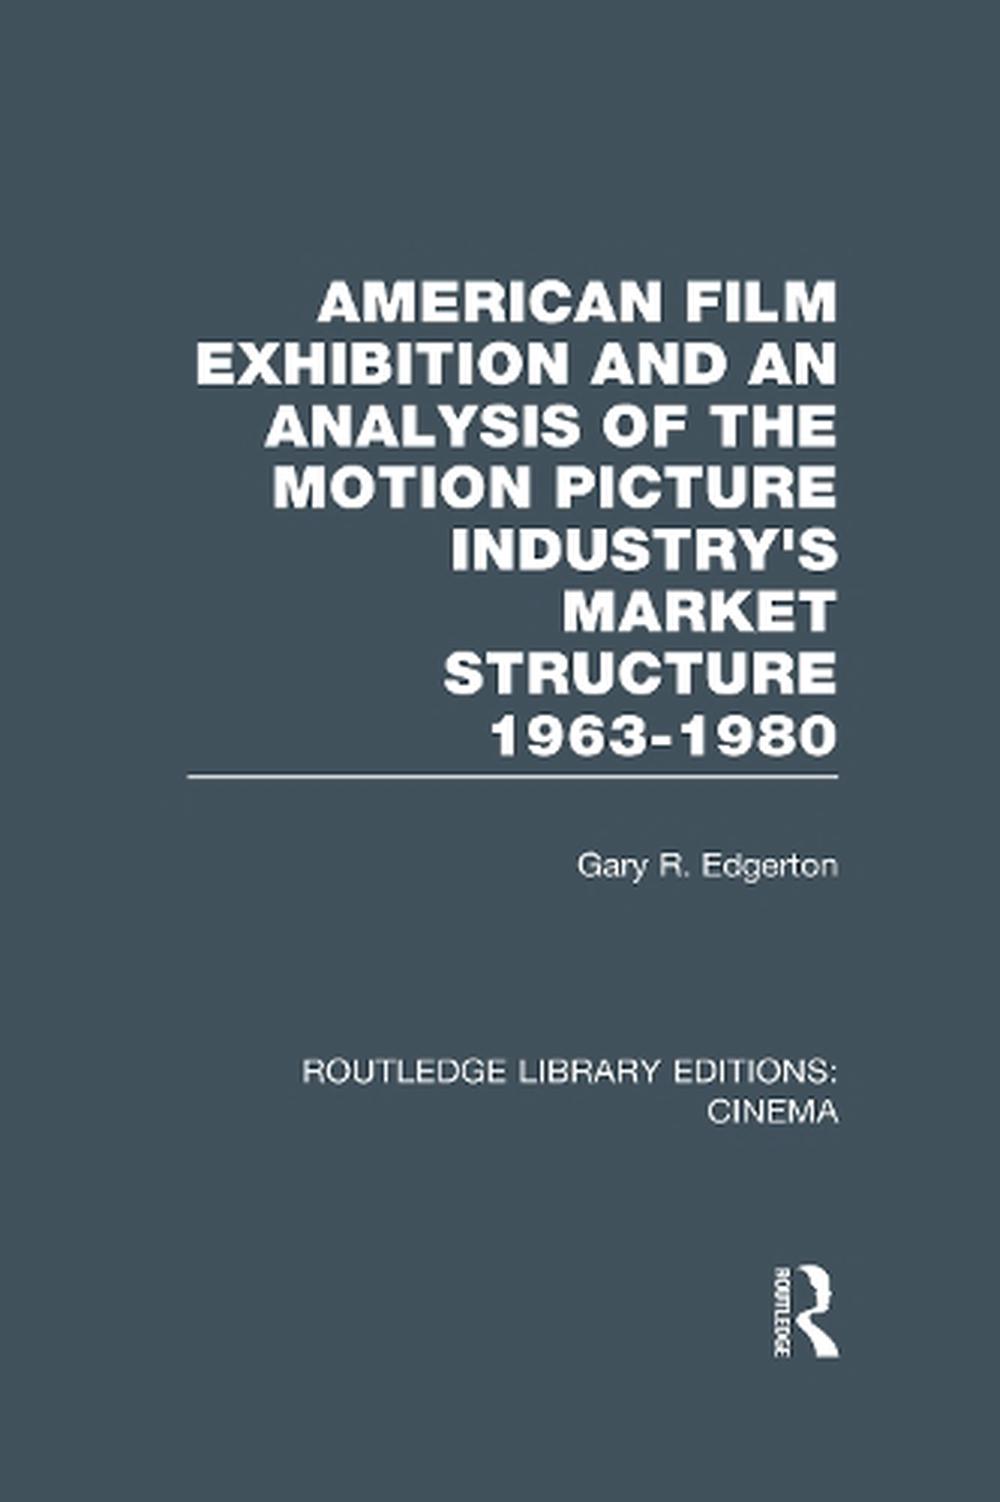 Movie Analysis Film Exhibition Platforms